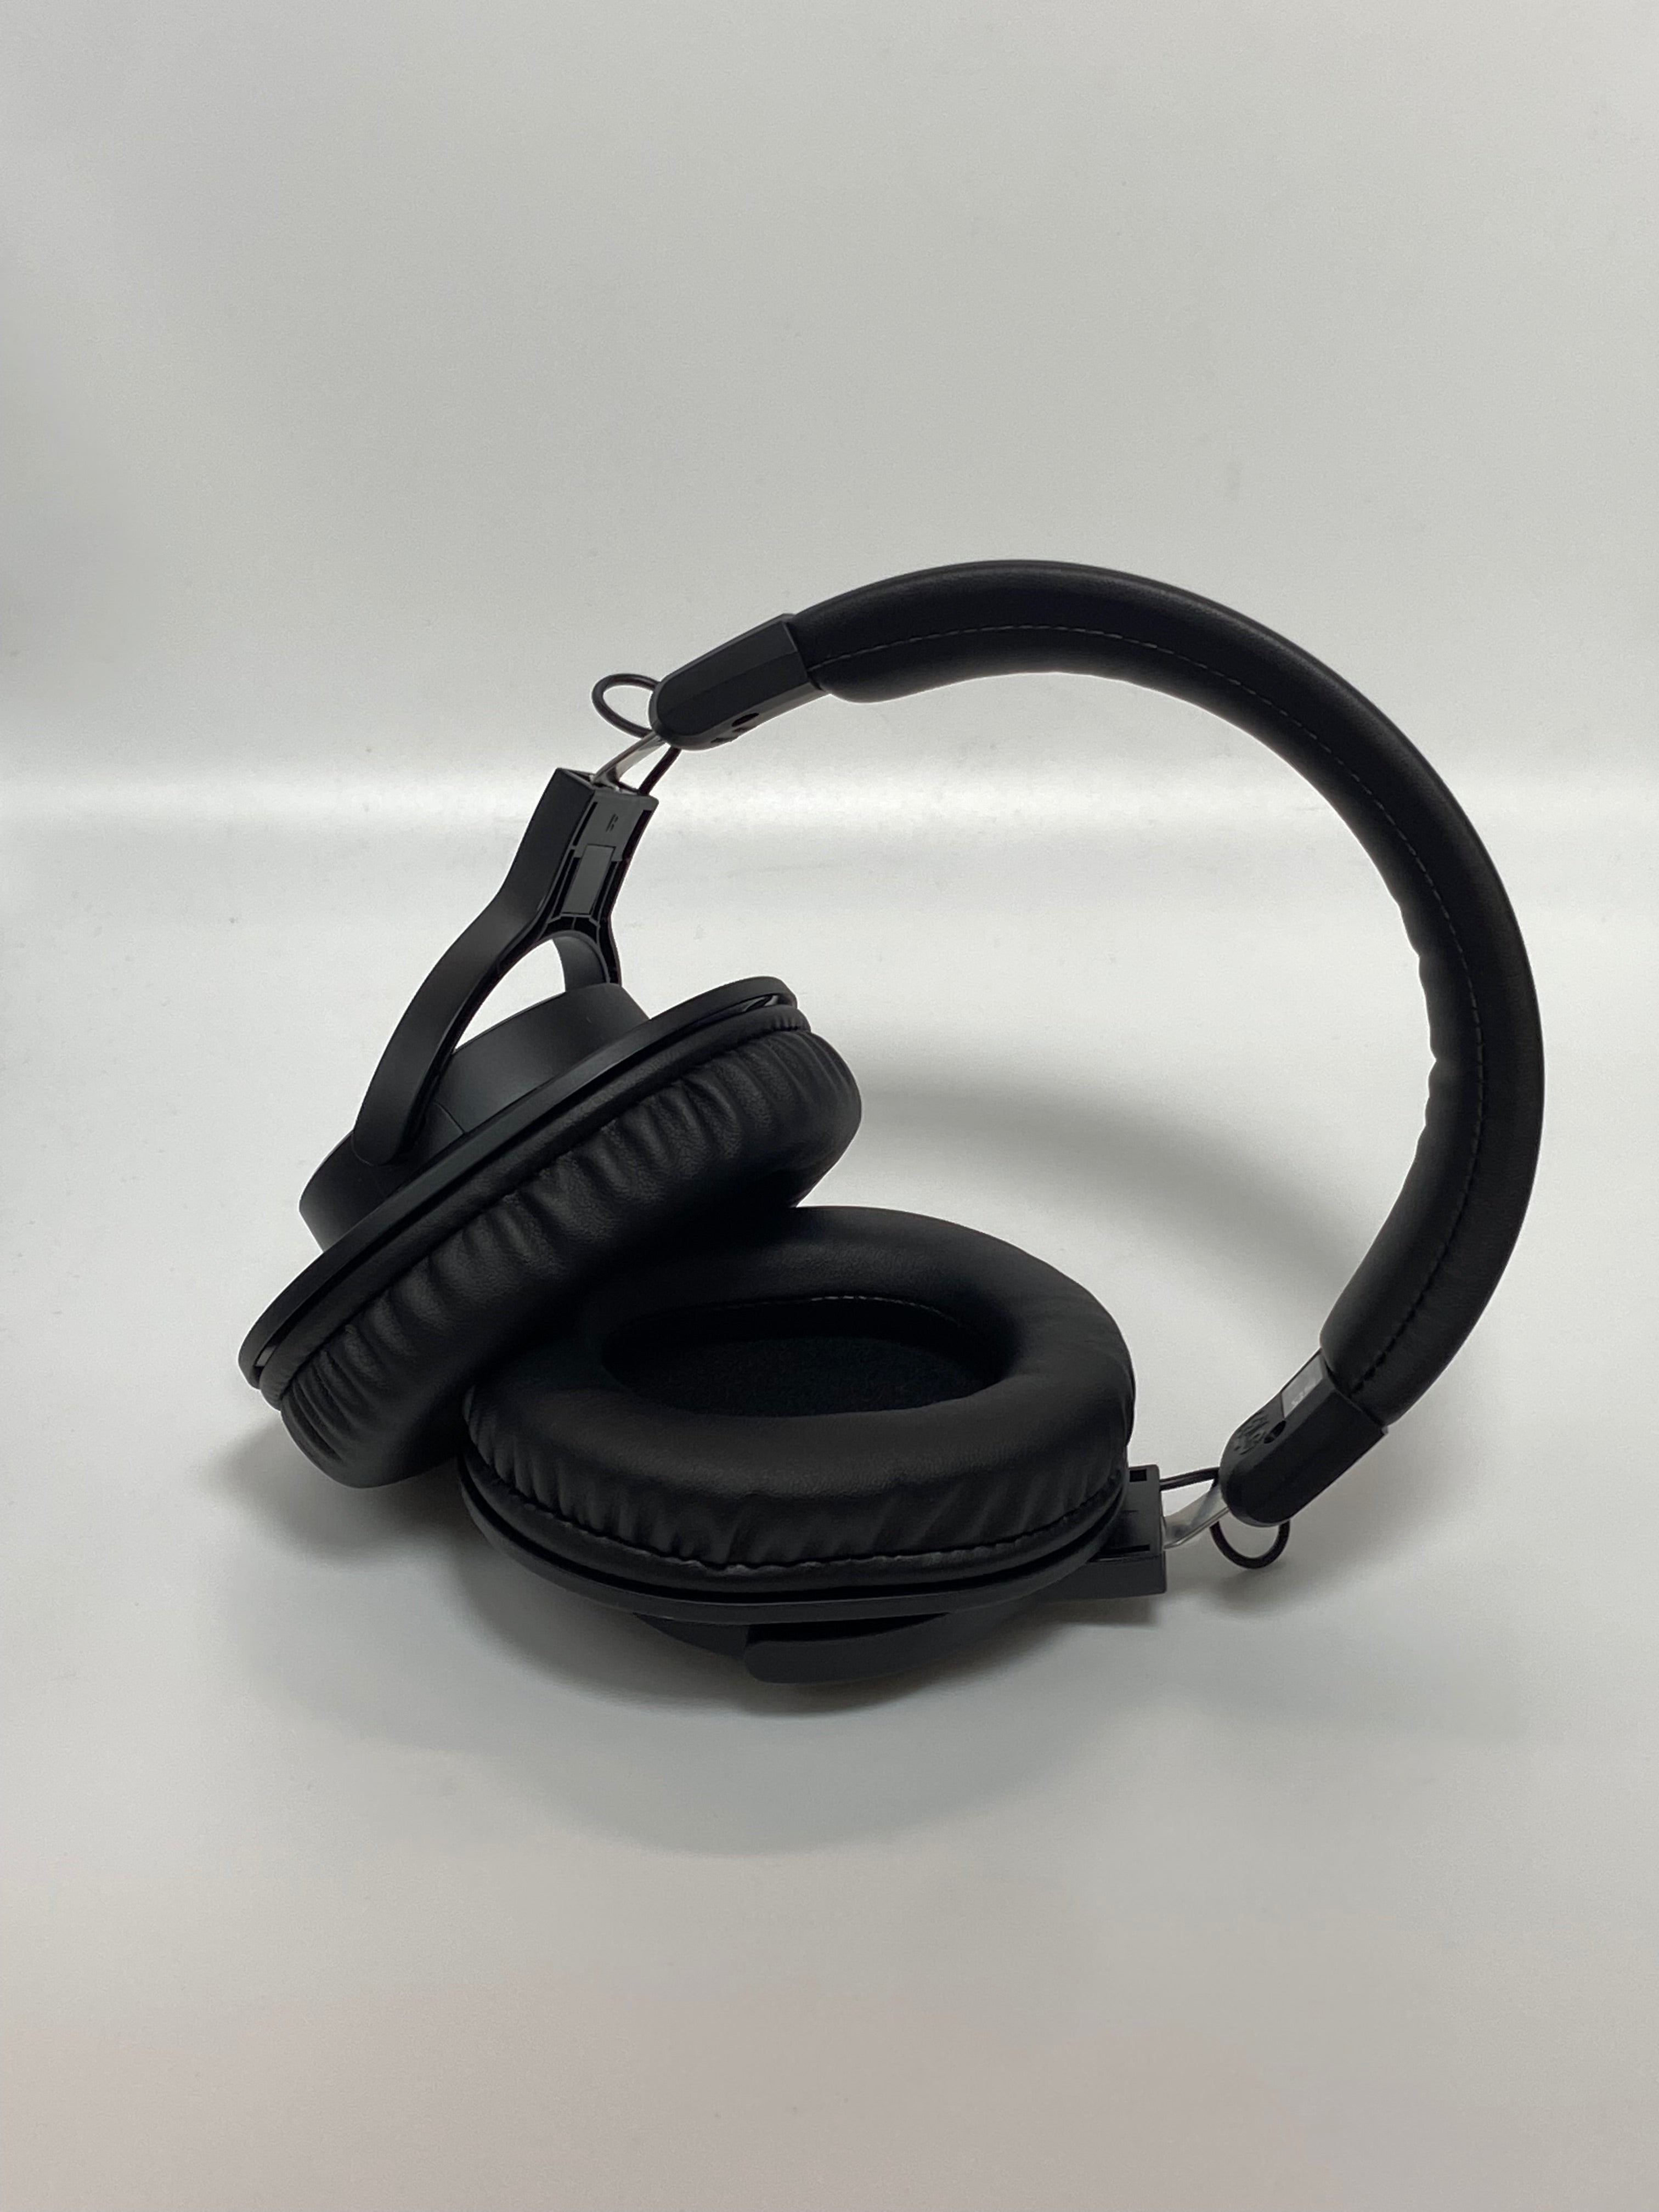 Review: Audio-Technica ATH-M50x